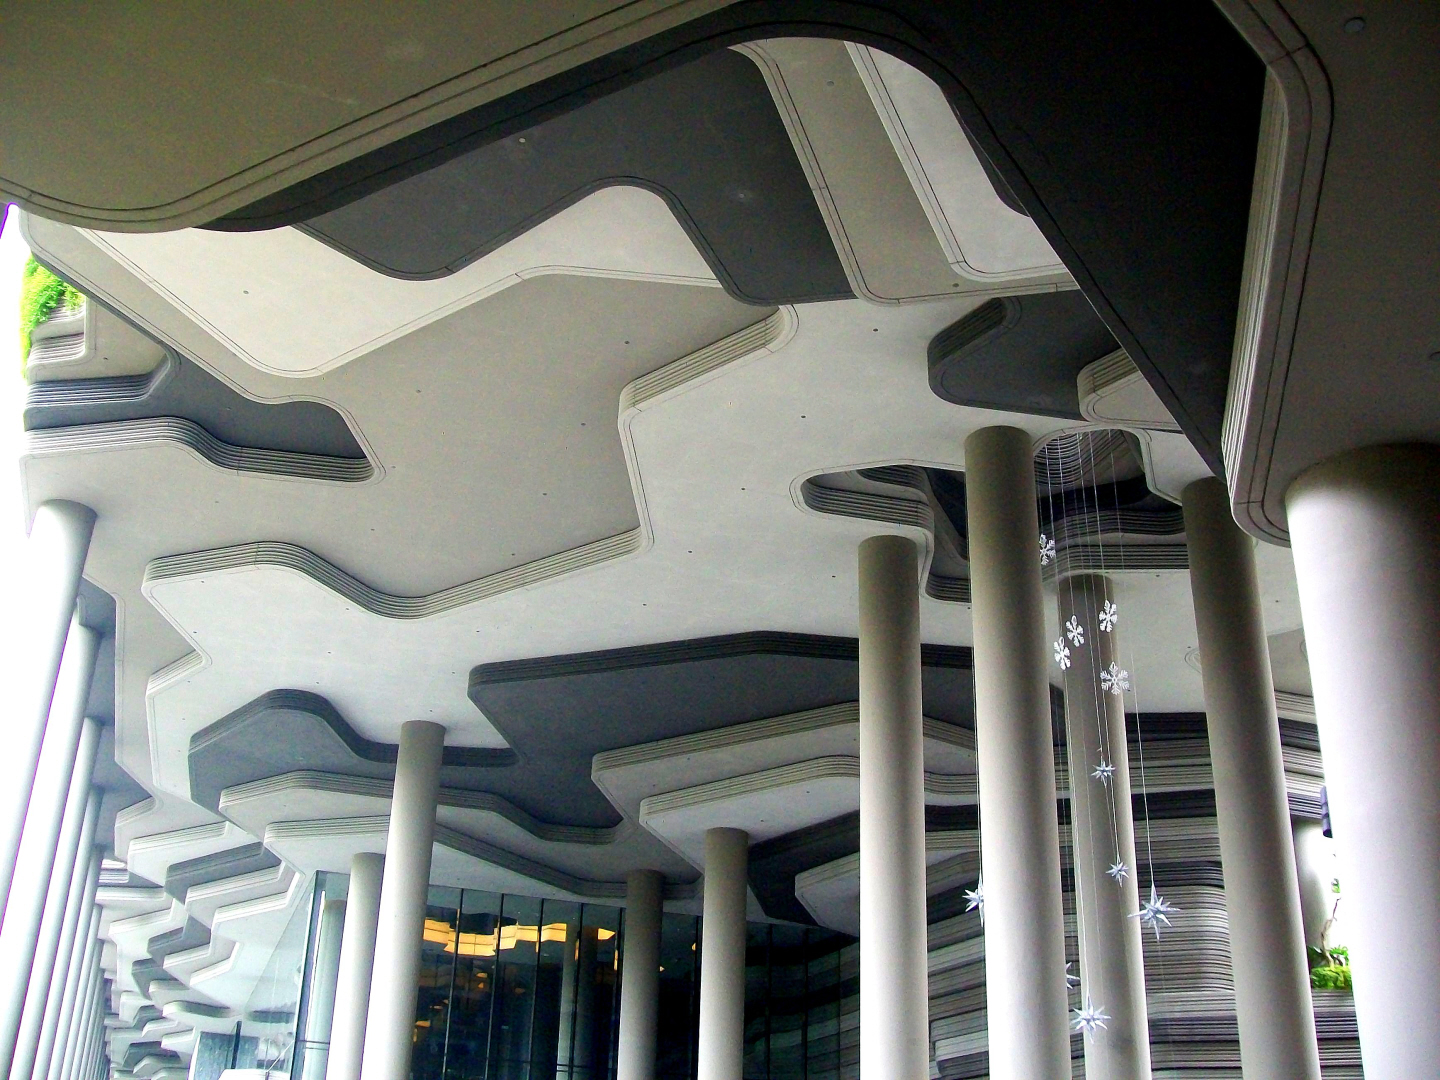 Fascinating Architecture - Street Scenes - Singapore